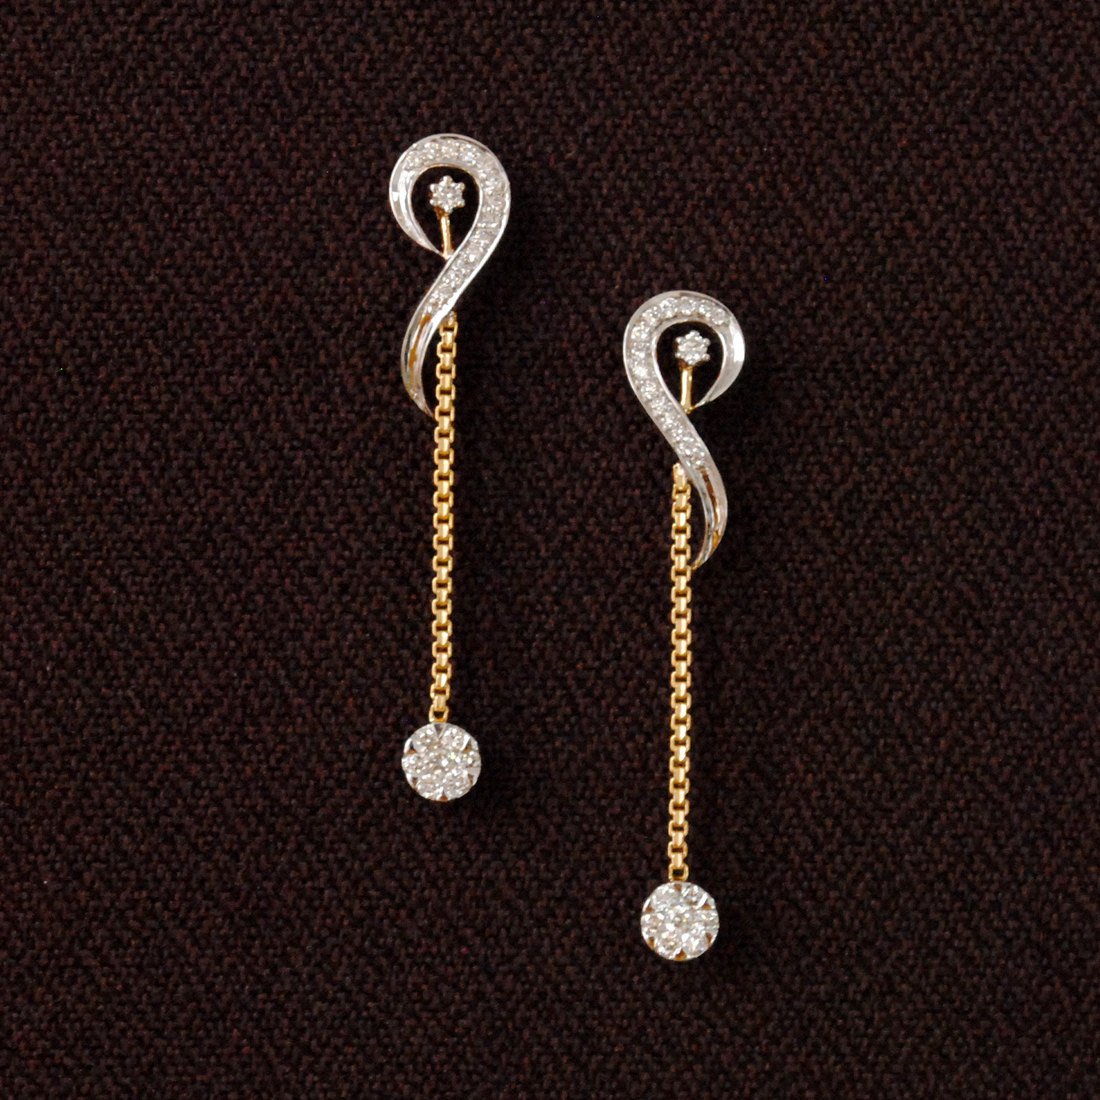 Peacock Gold plated handmade long chain earrings at 1450  Azilaa